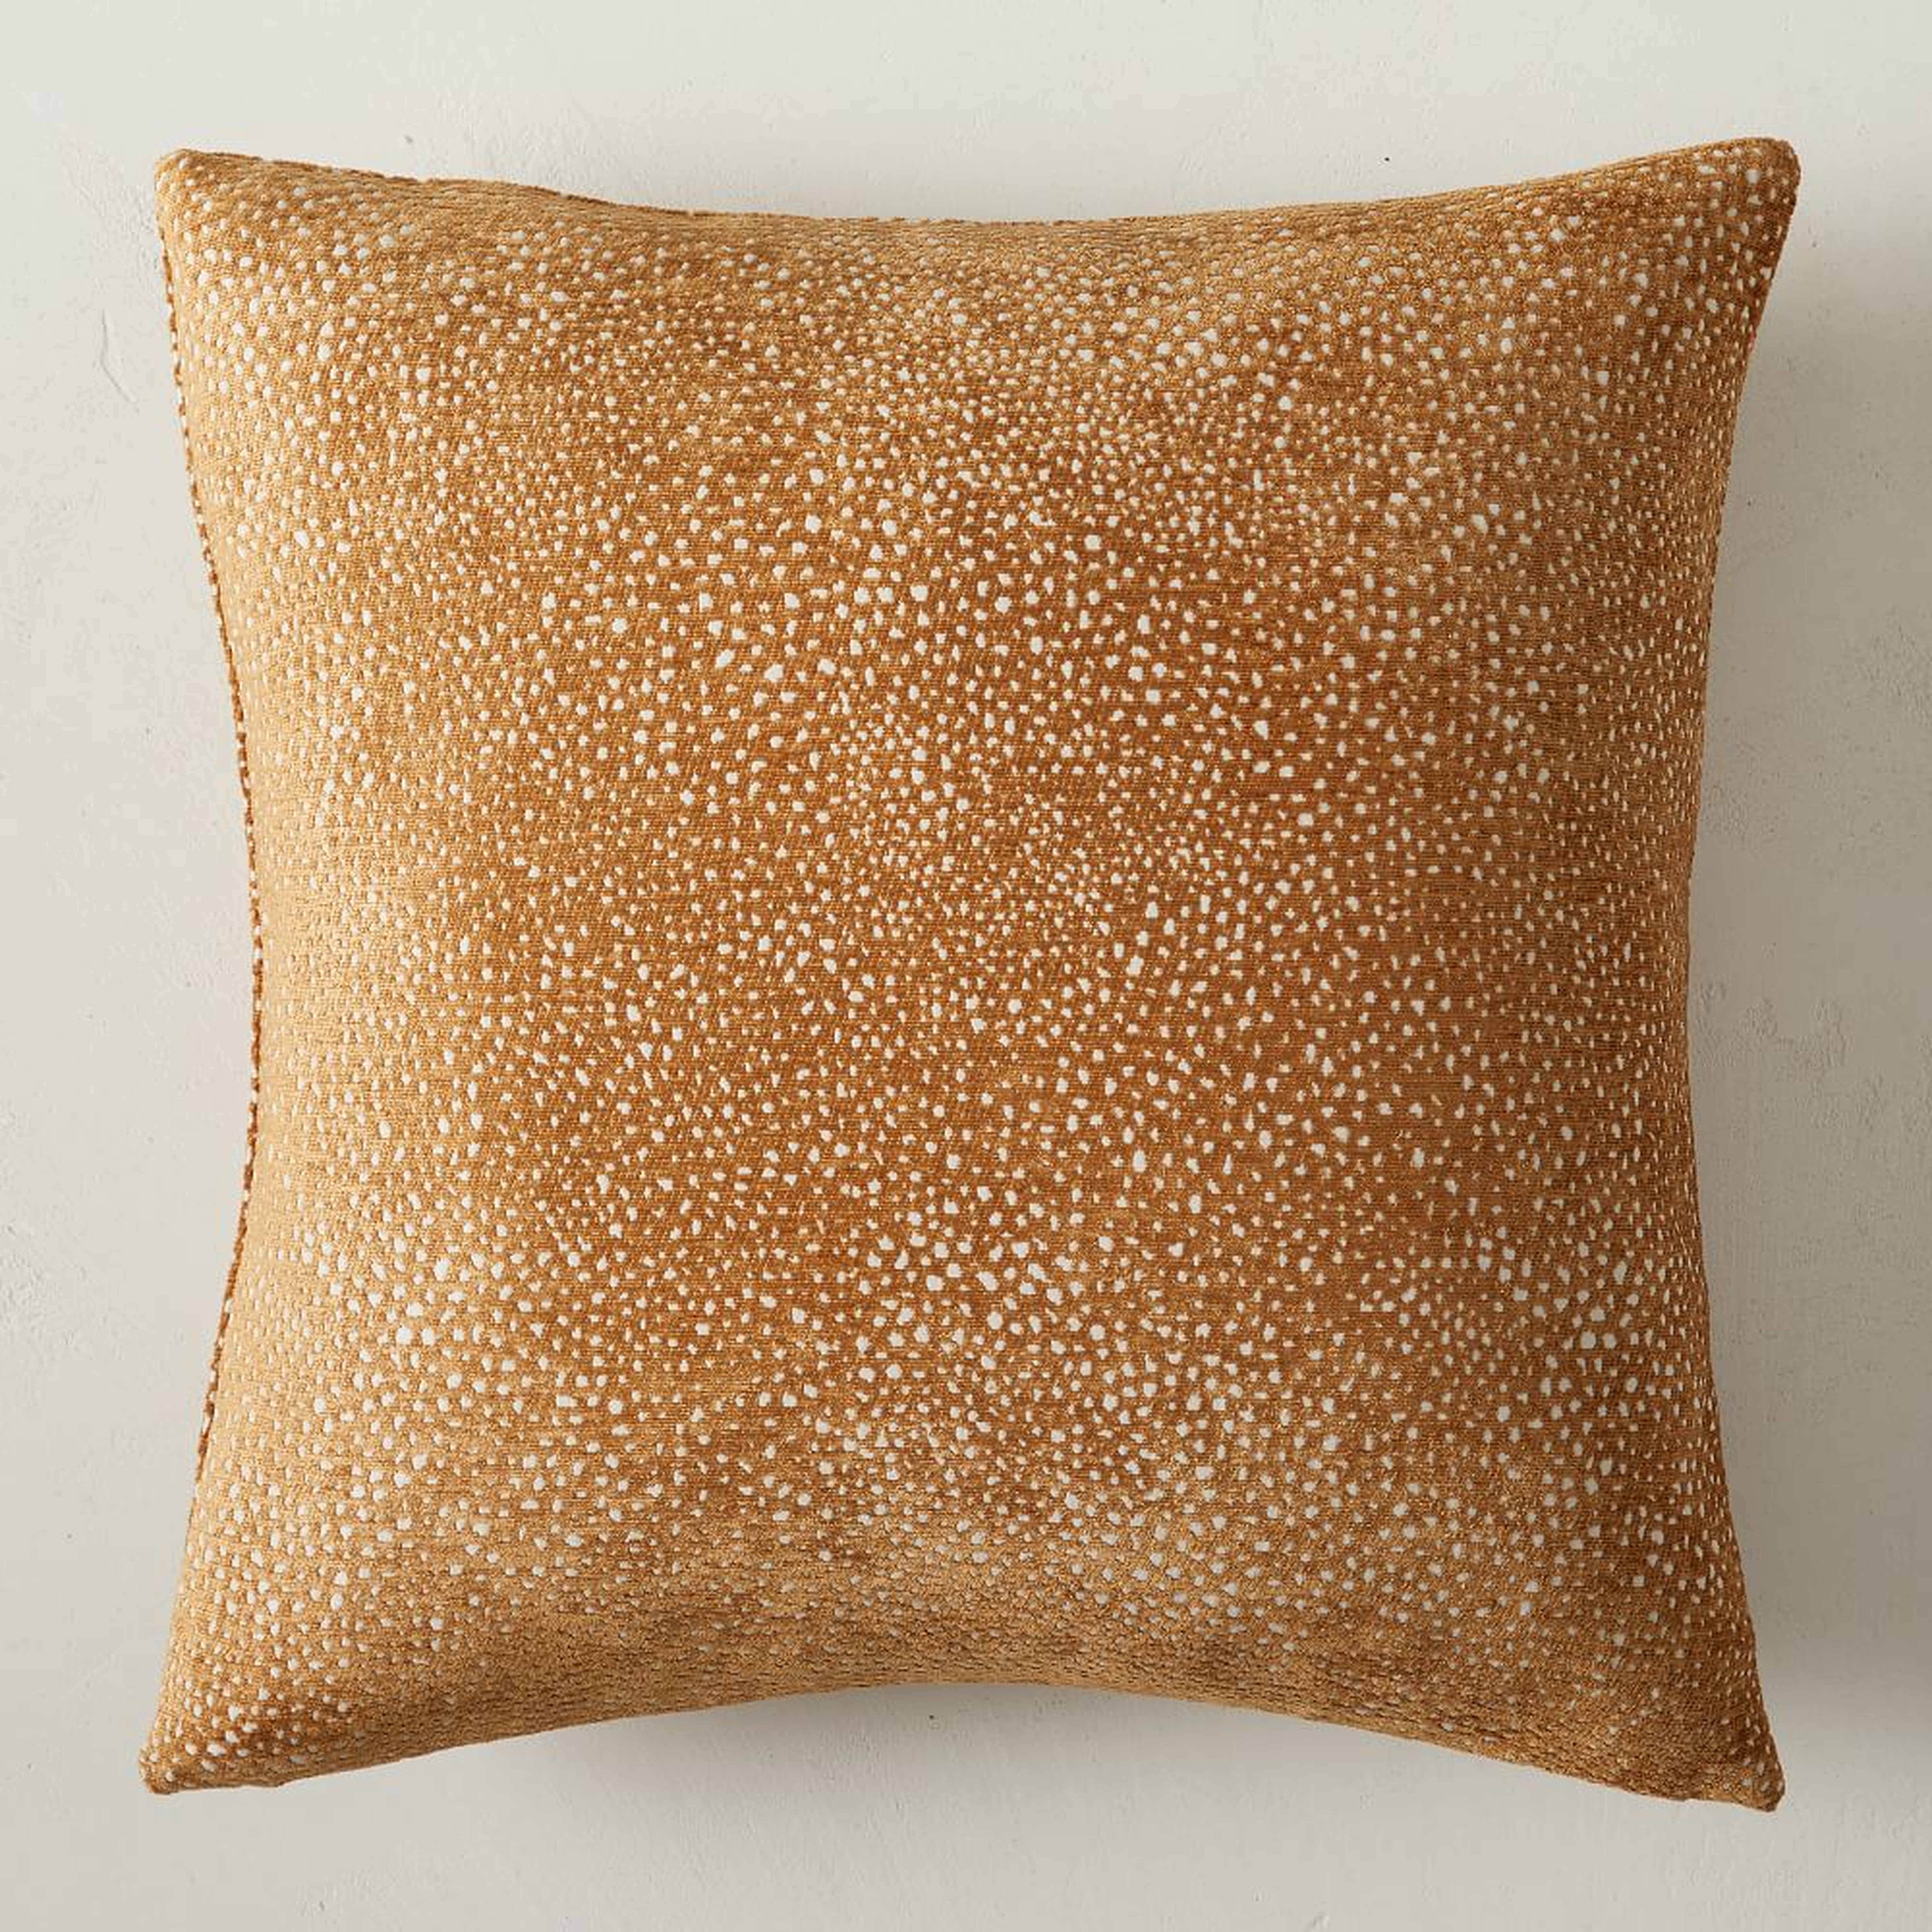 Dotted Chenille Jacquard Pillow Cover, 20"x20", Golden Oak - West Elm